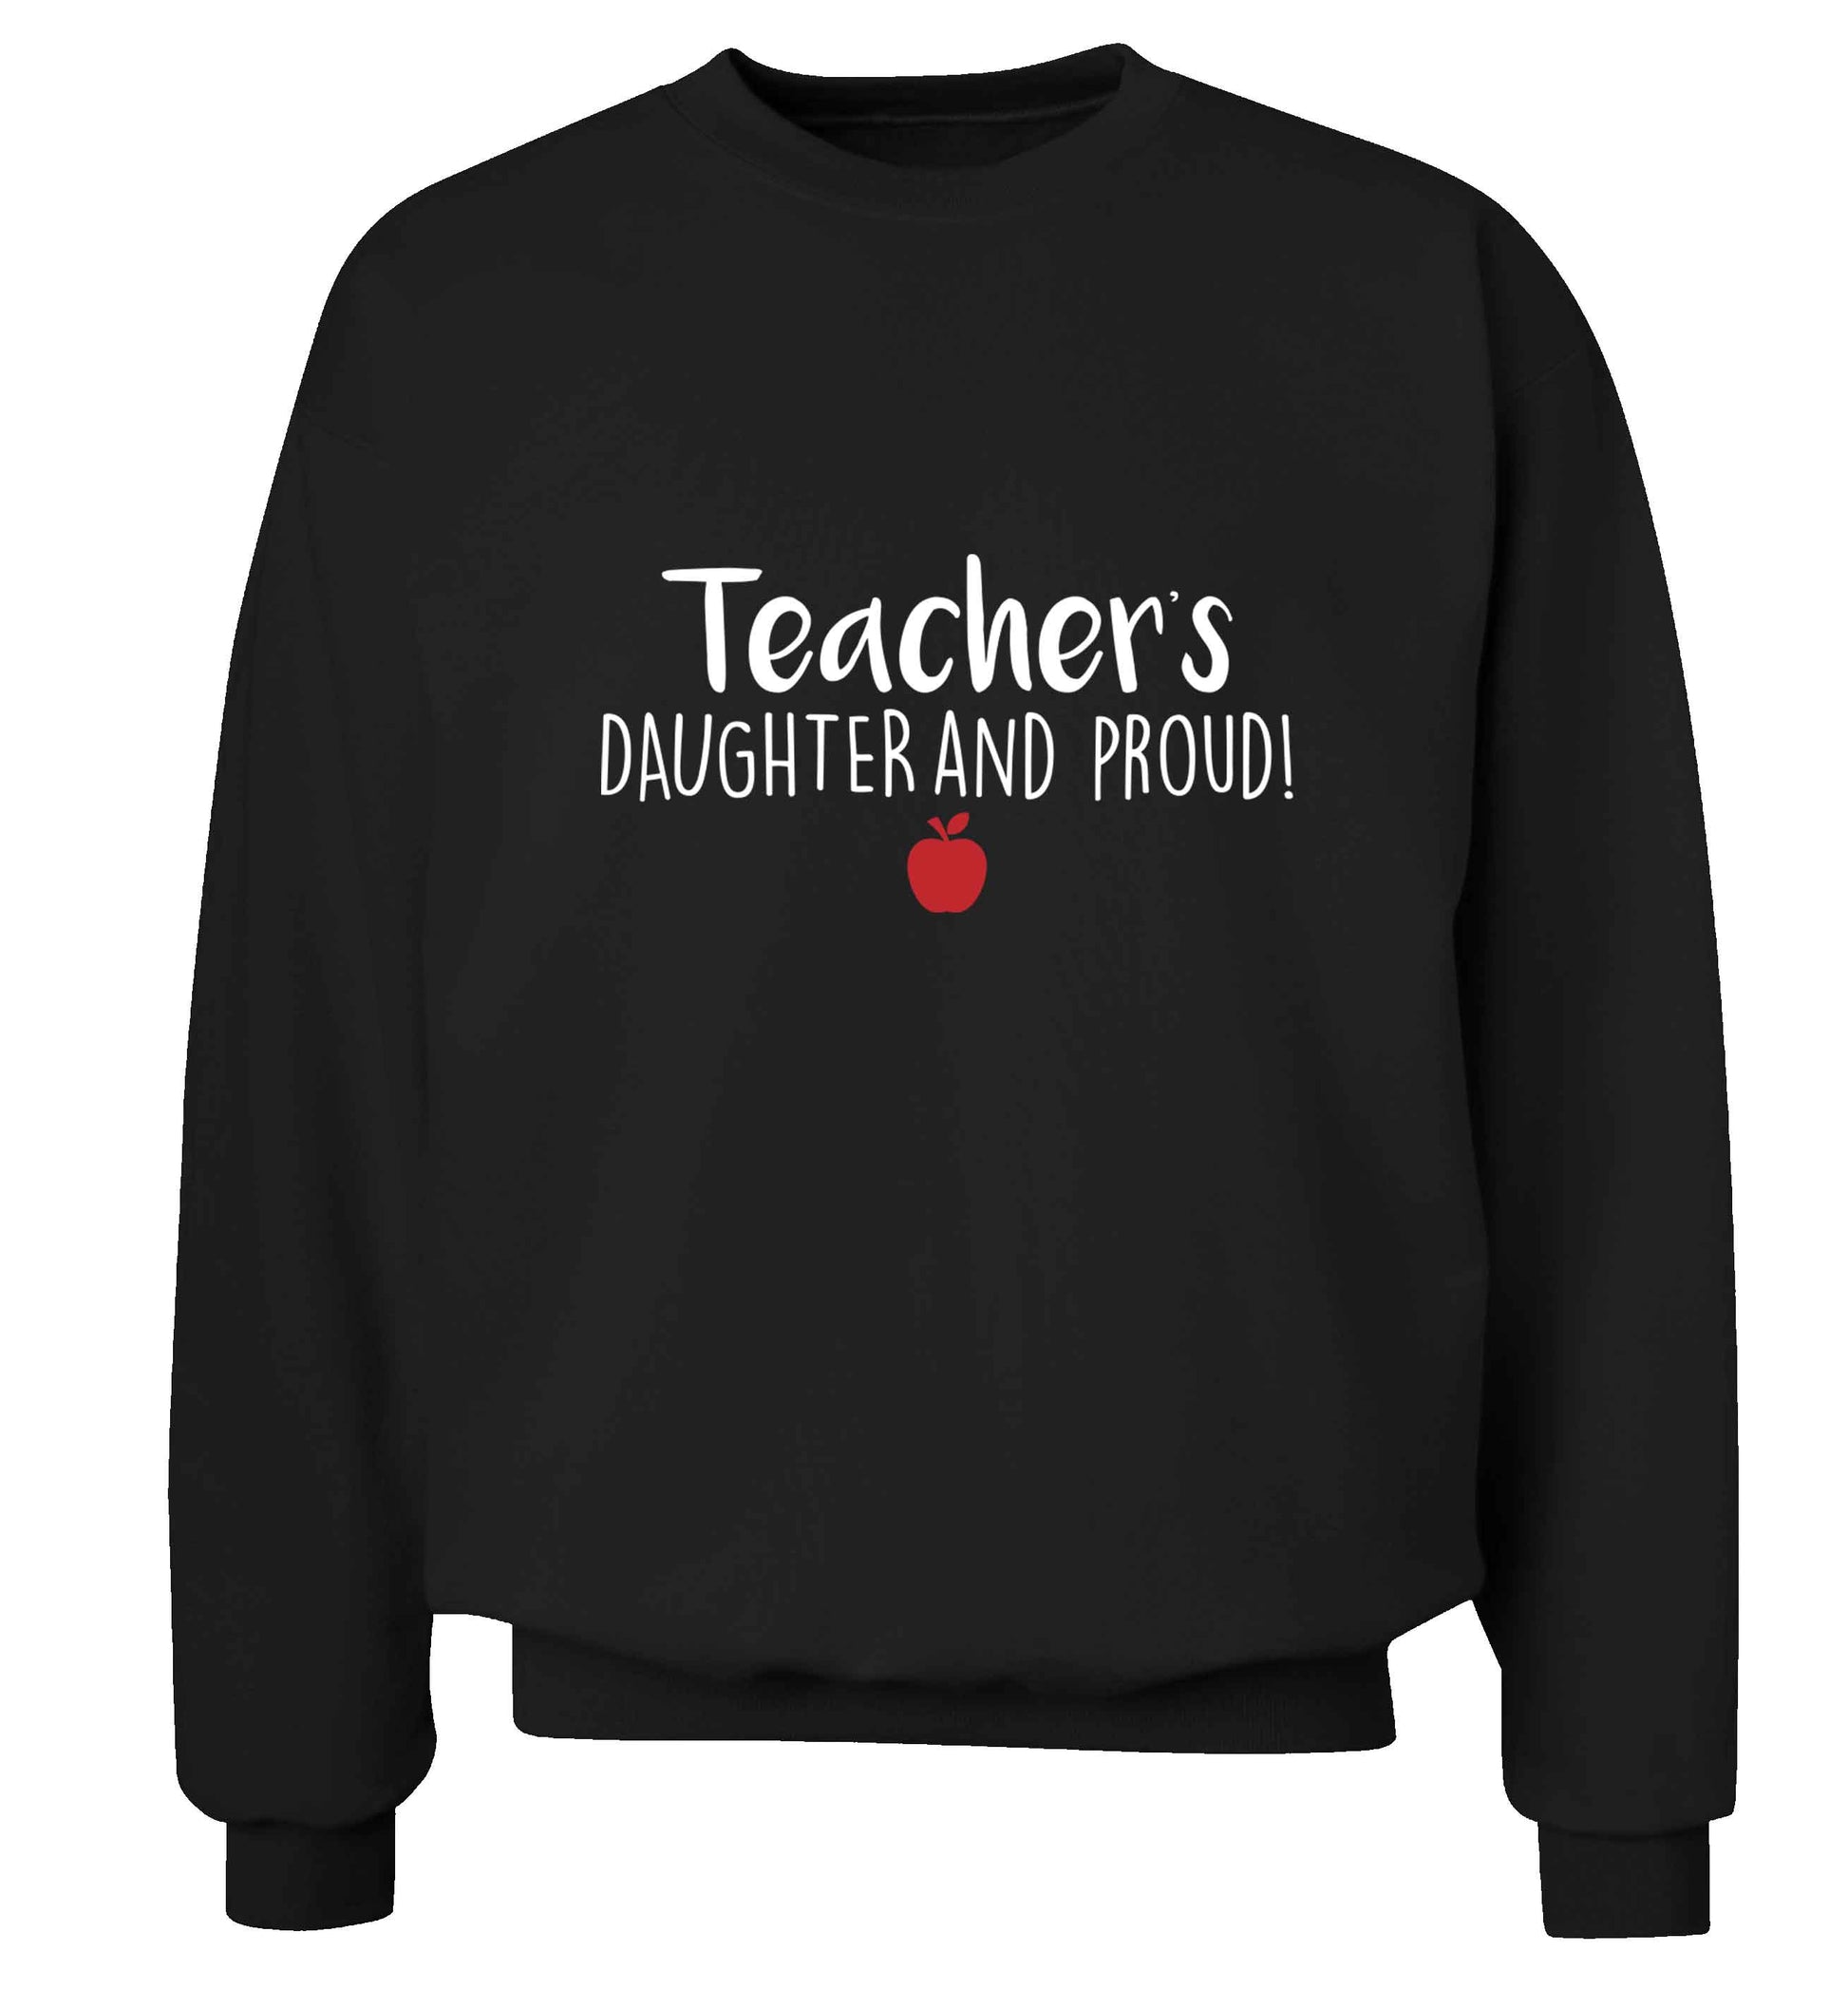 Teachers daughter and proud adult's unisex black sweater 2XL